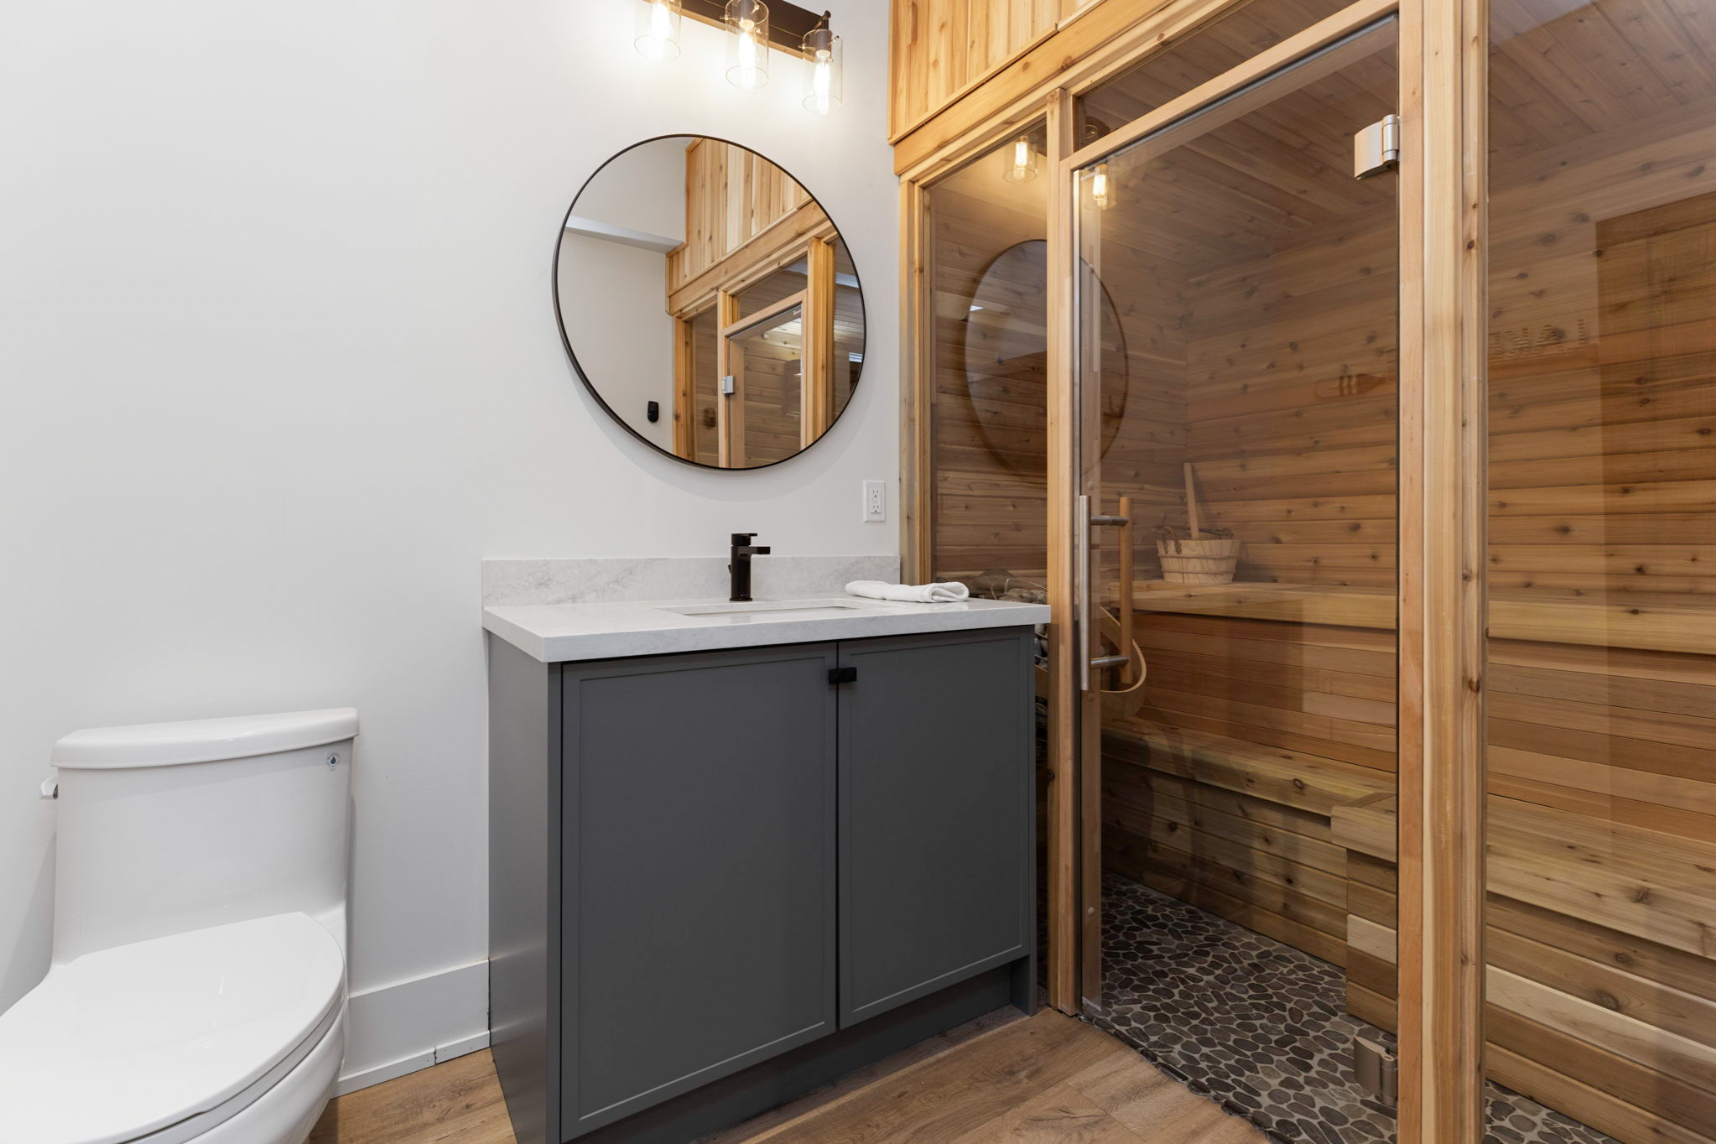 Finally, the basement bathroom, with its own cedar sauna. 